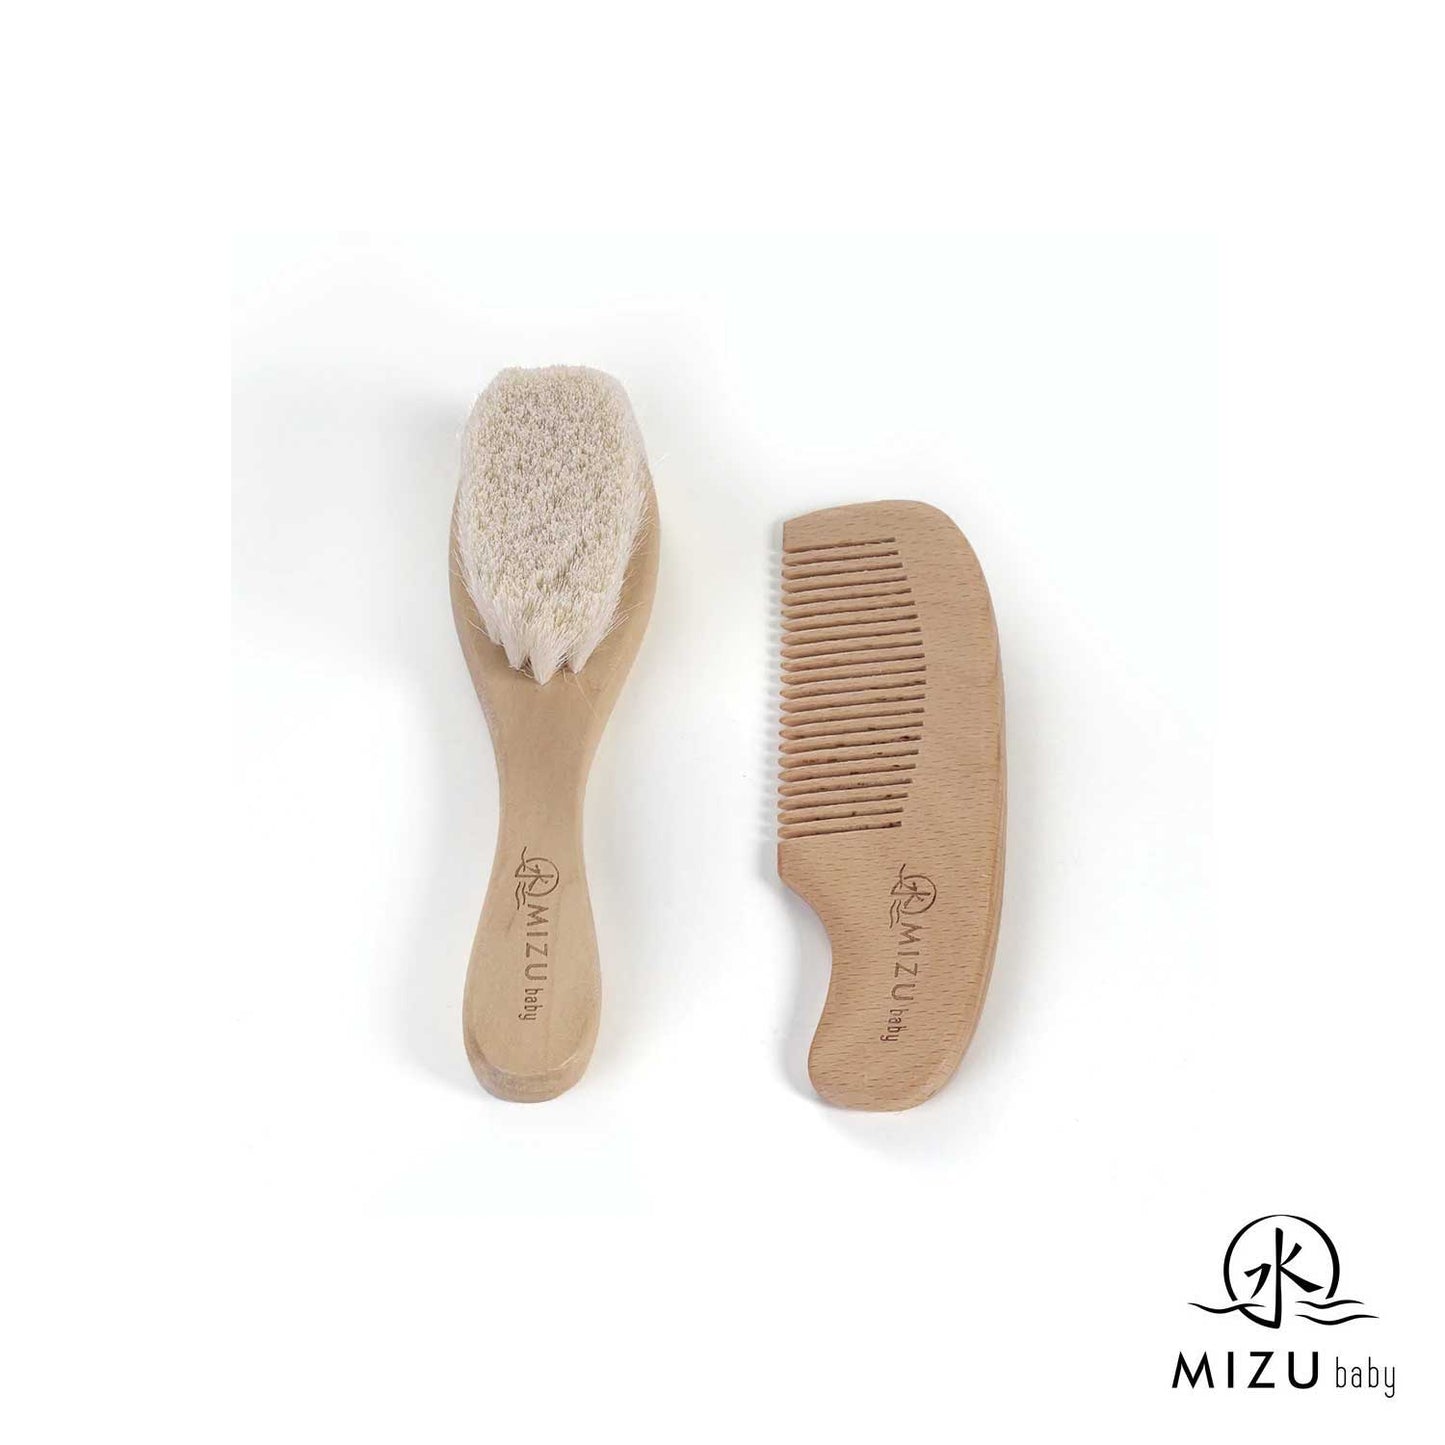 Mizu - Mami Set spazzola e pettine in bamboo